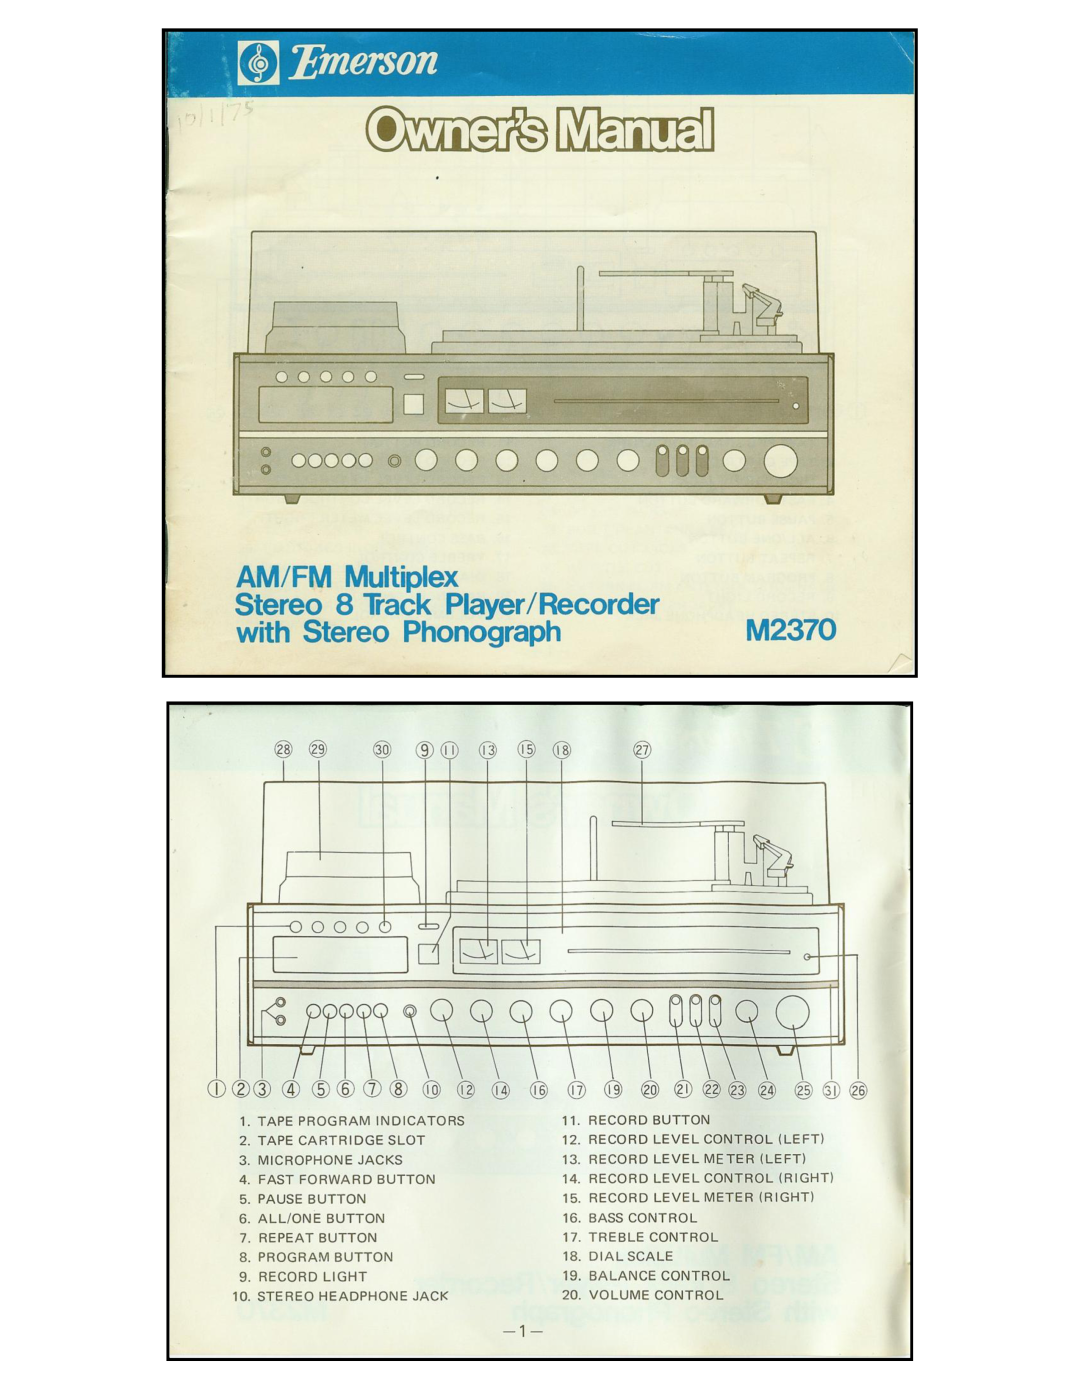 Emerson M2370 manual 